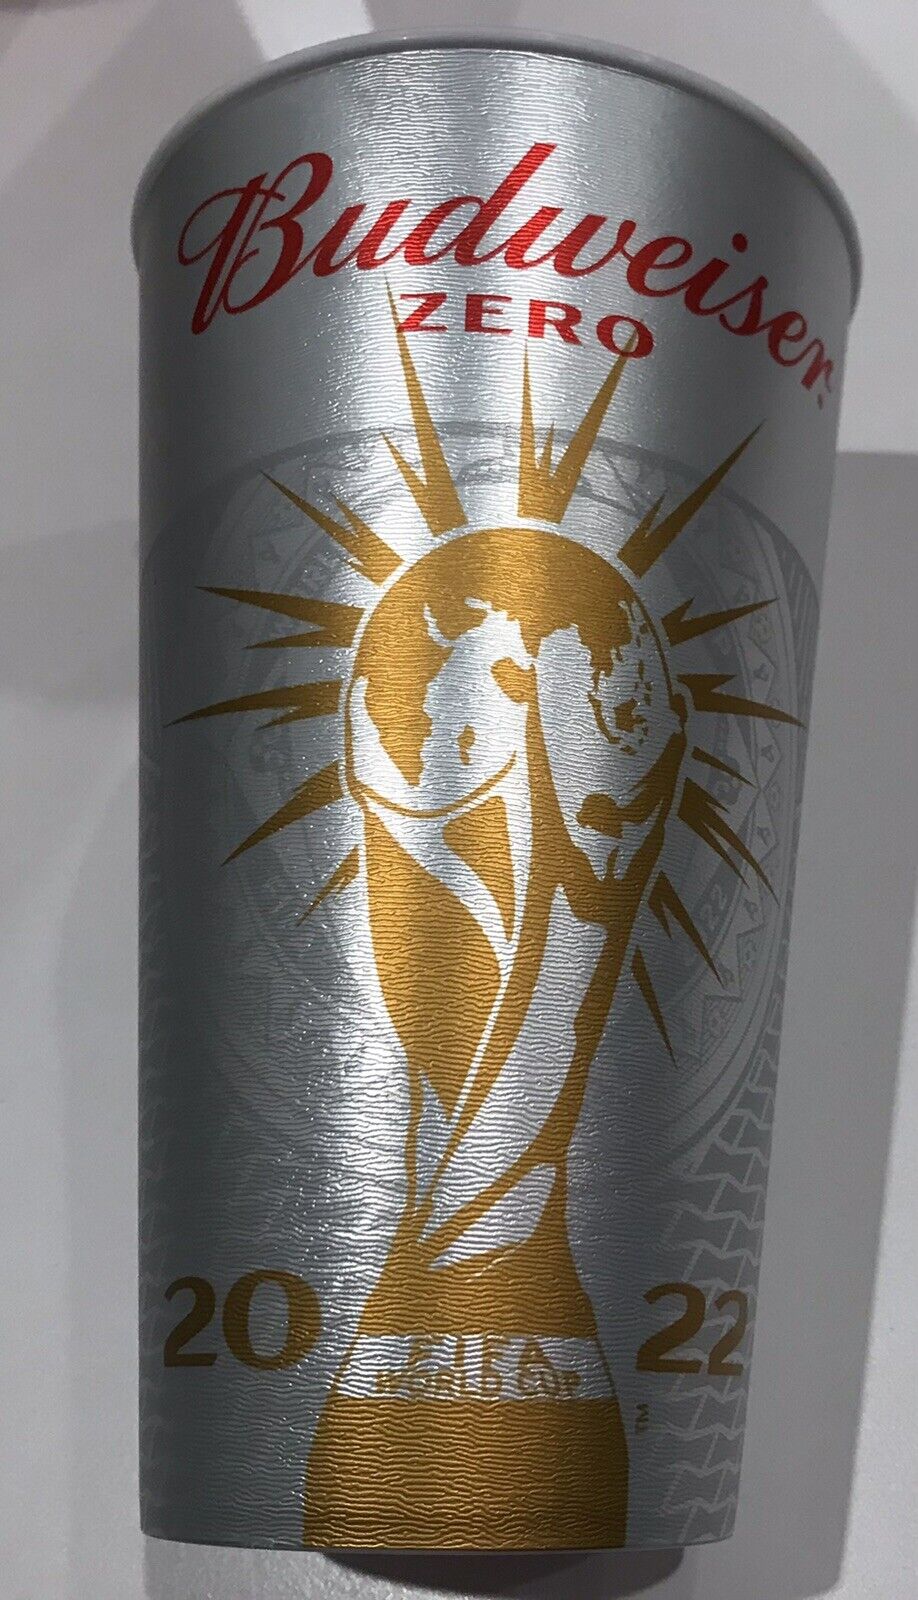 Qatar's World Cup beer ban surprises Budweiser - MarketWatch